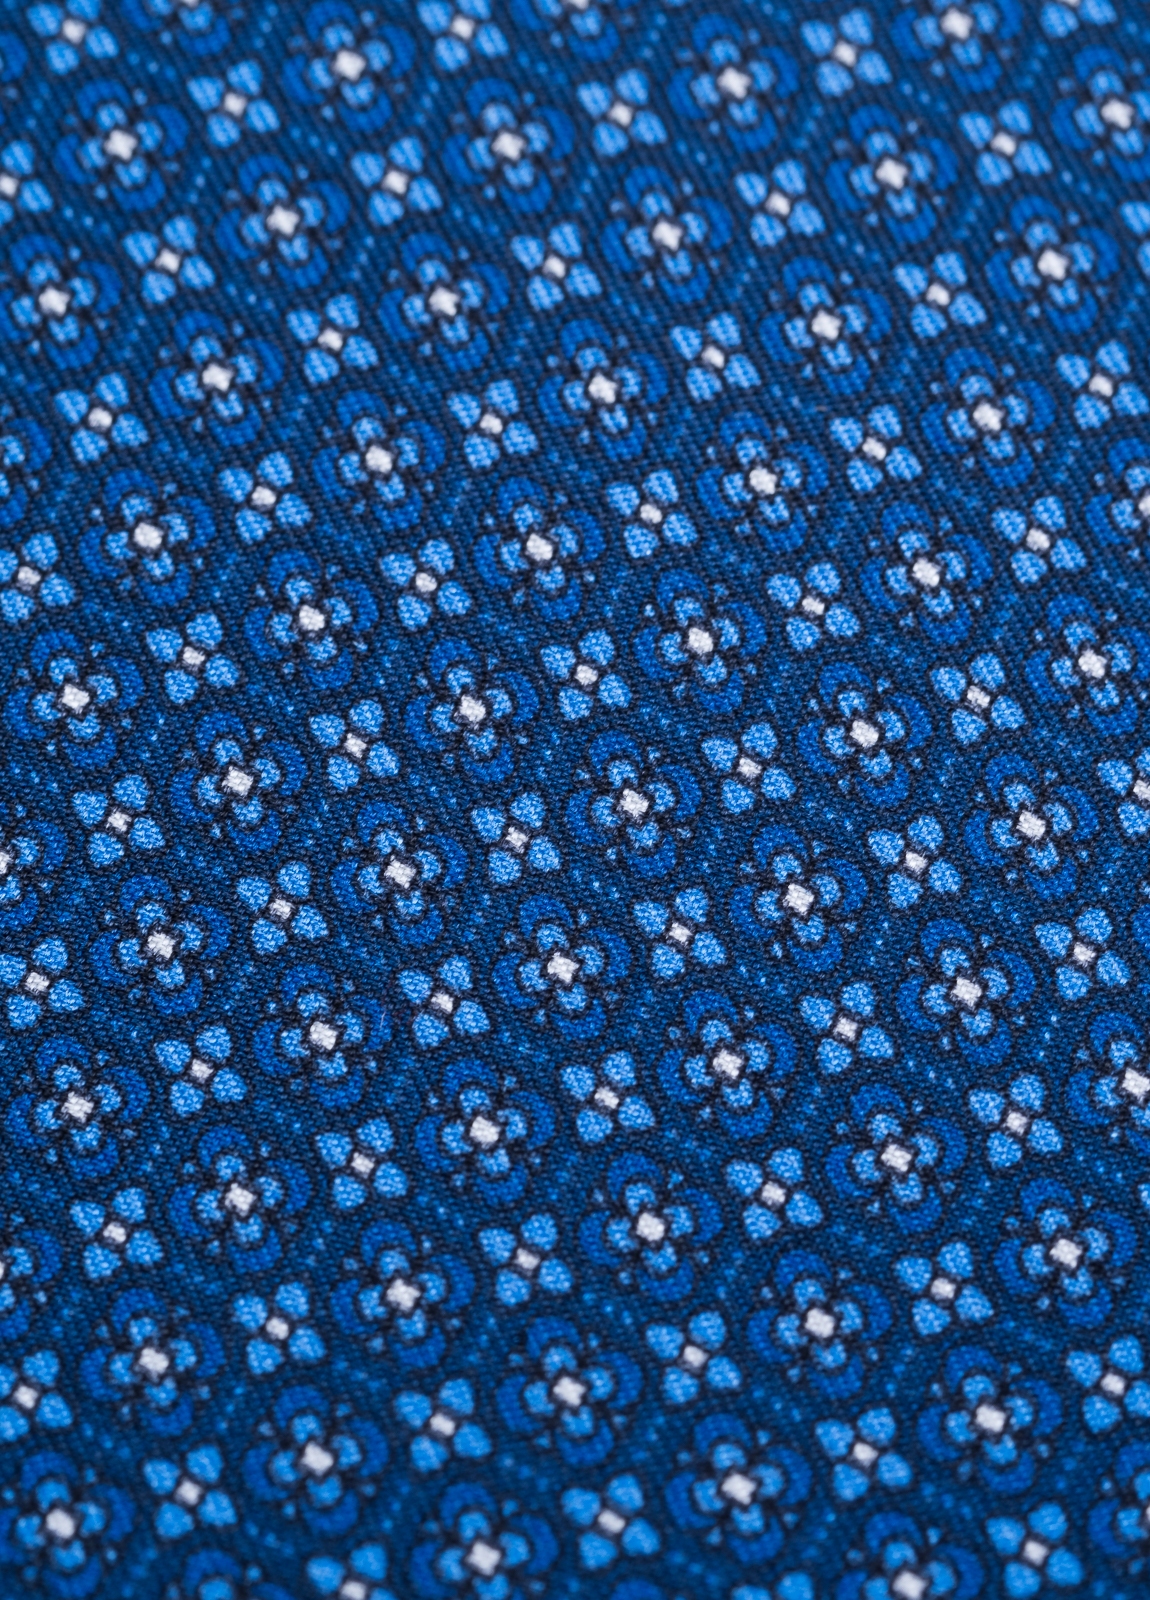 Corbata FUREST COLECCIÓN color azul tinta con dibujo floral - Ítem2